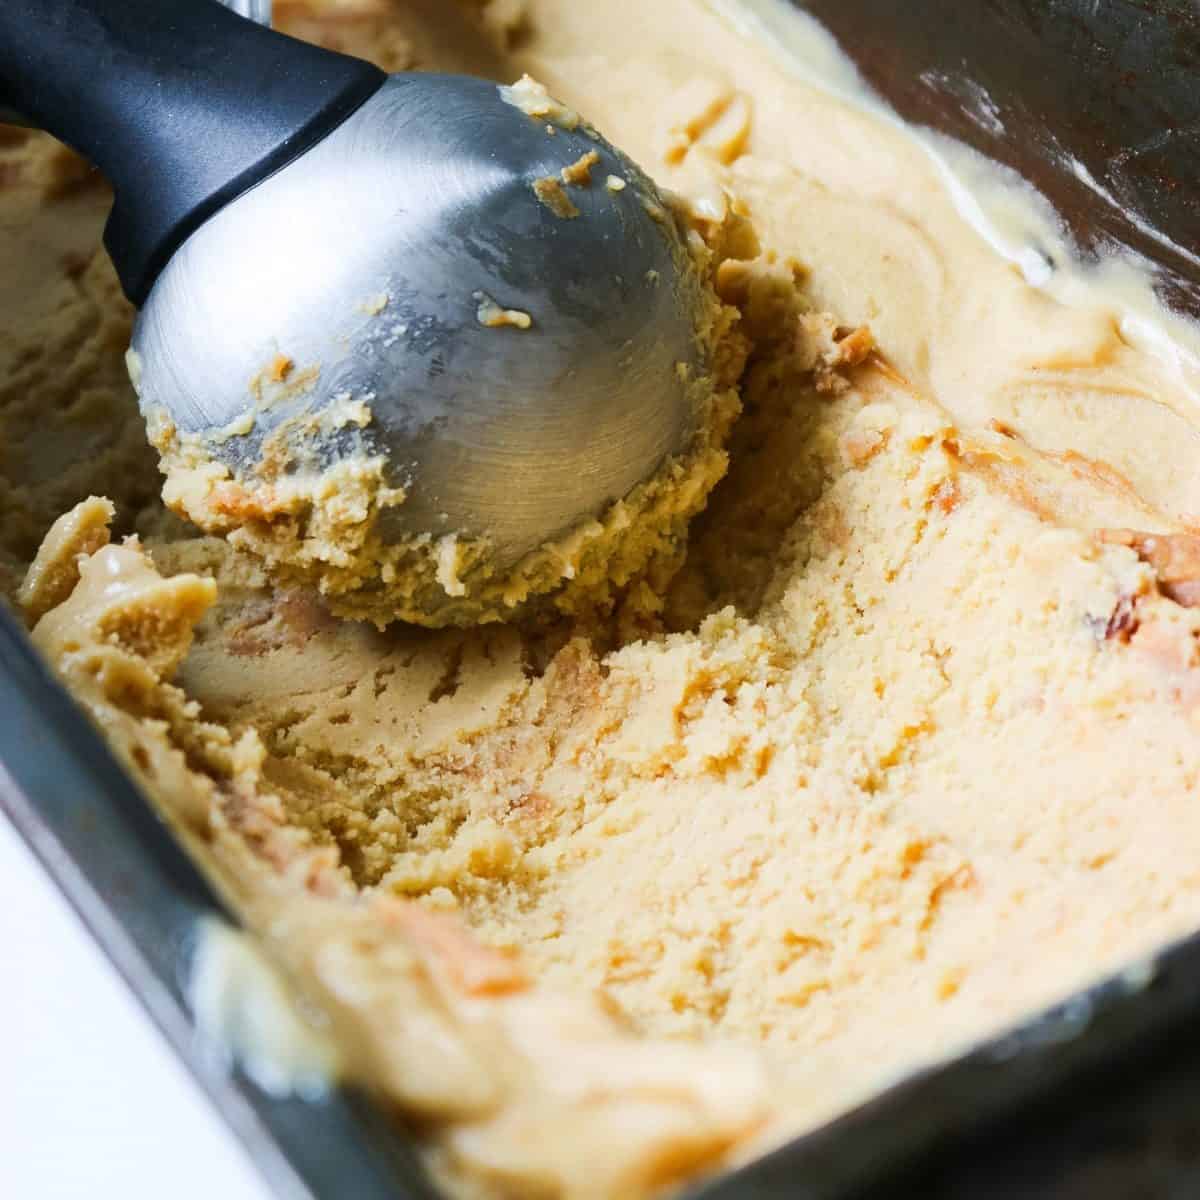 A close up of homemade ice cream.